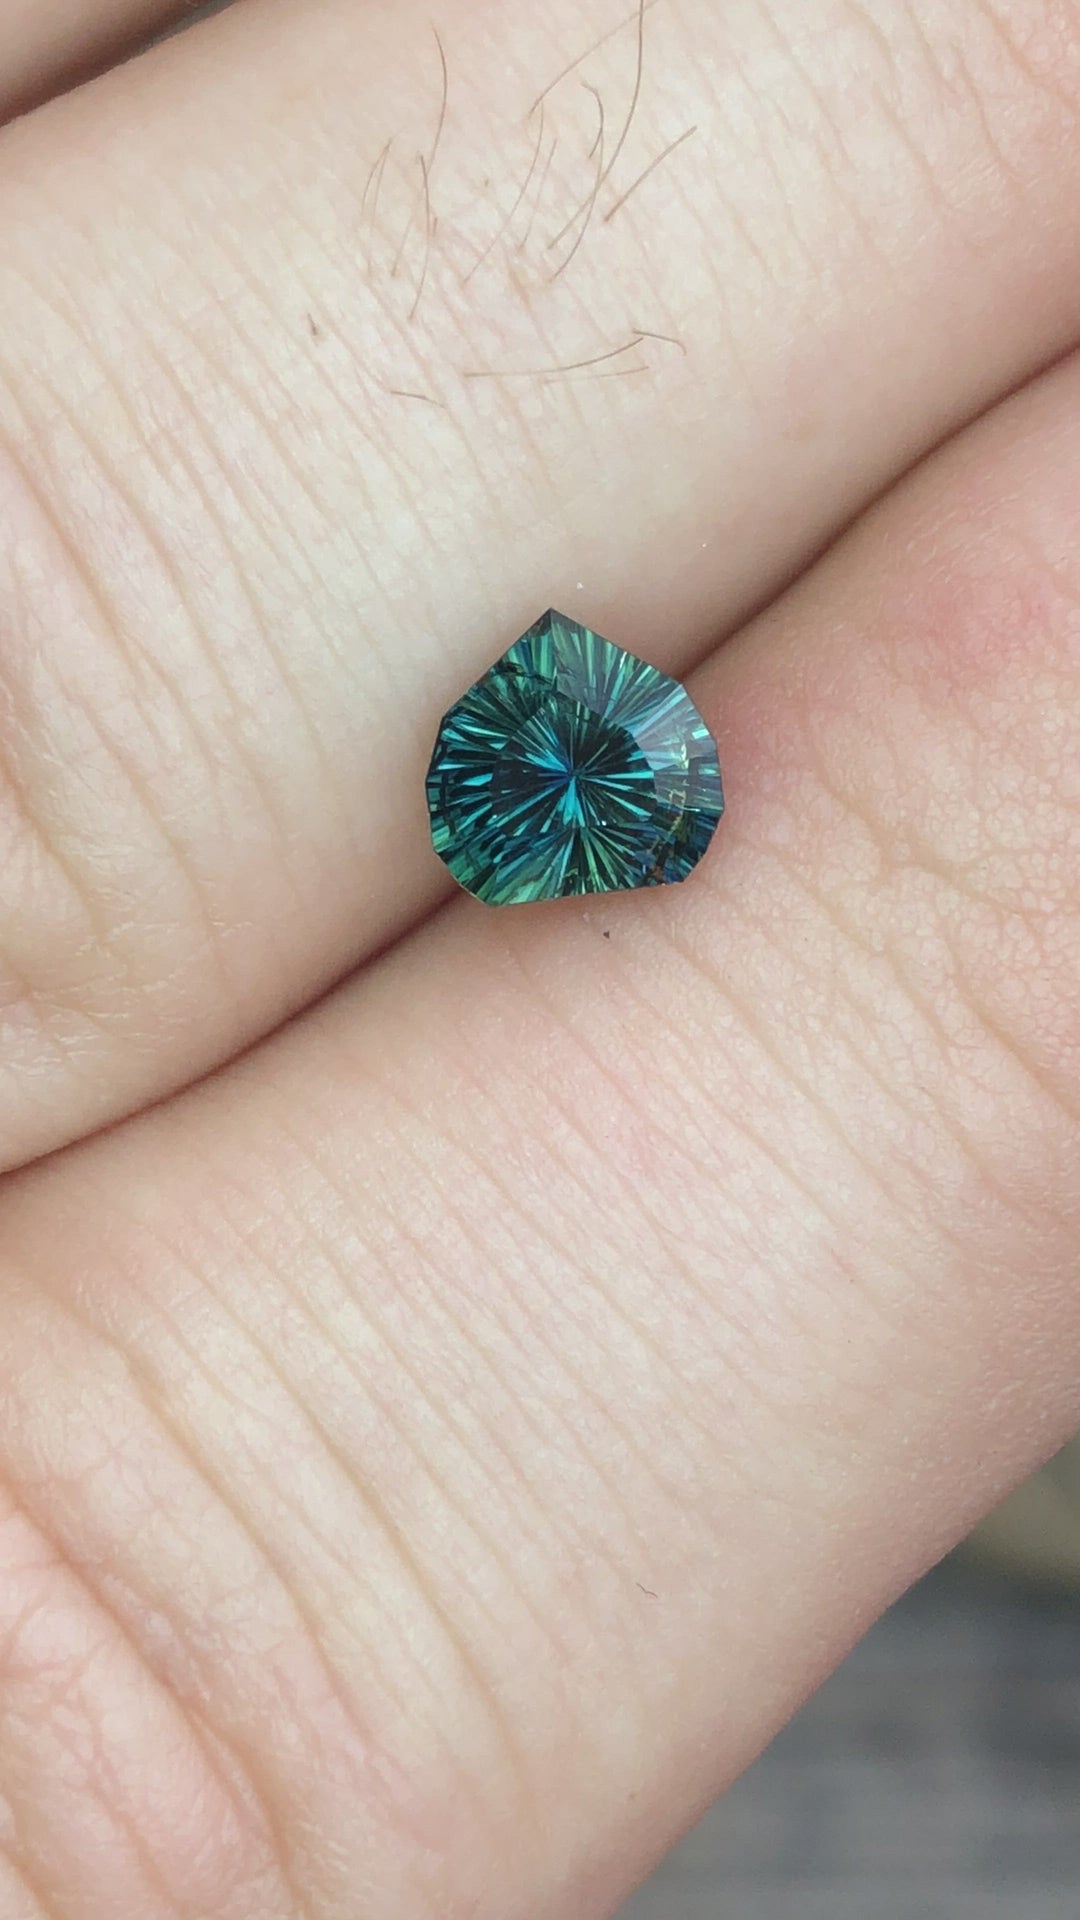 Saphir turquoise taille fantaisie - Saphir taille cœur - 1,2 carats 6,1x6,2 mm